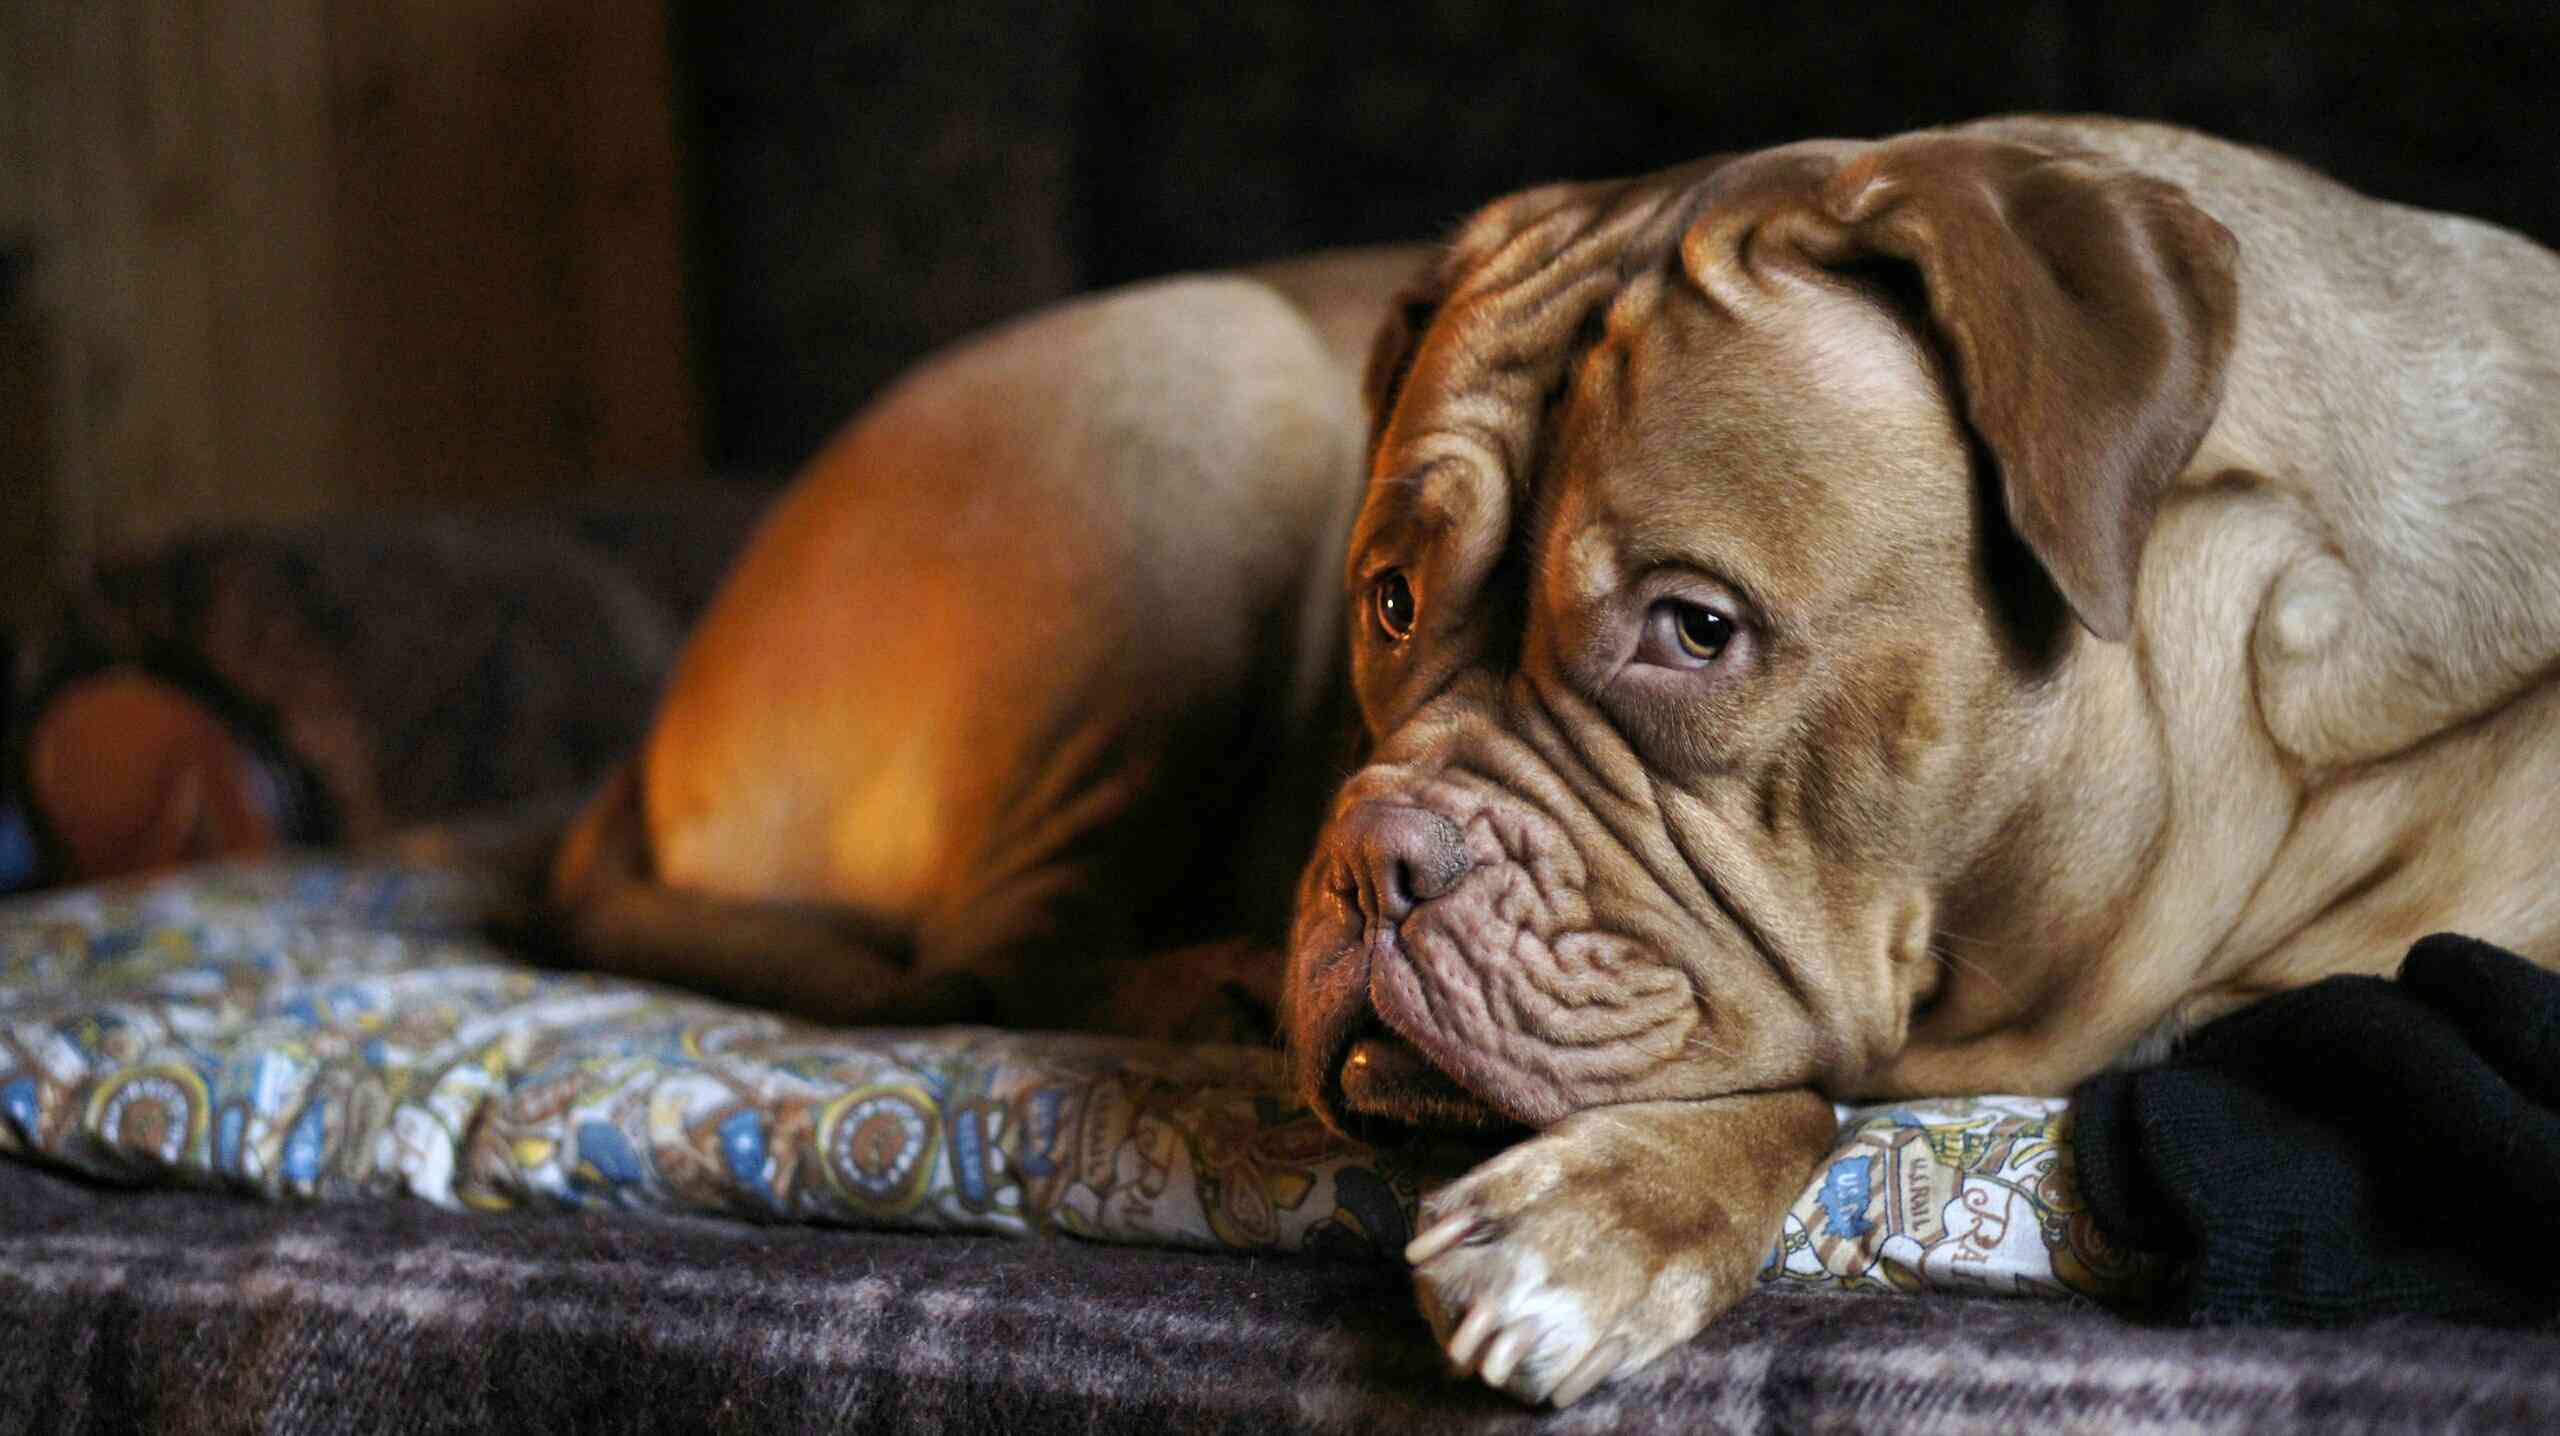 A large, brown, wrinkly dog laying down and looking sheepishly at the camera.